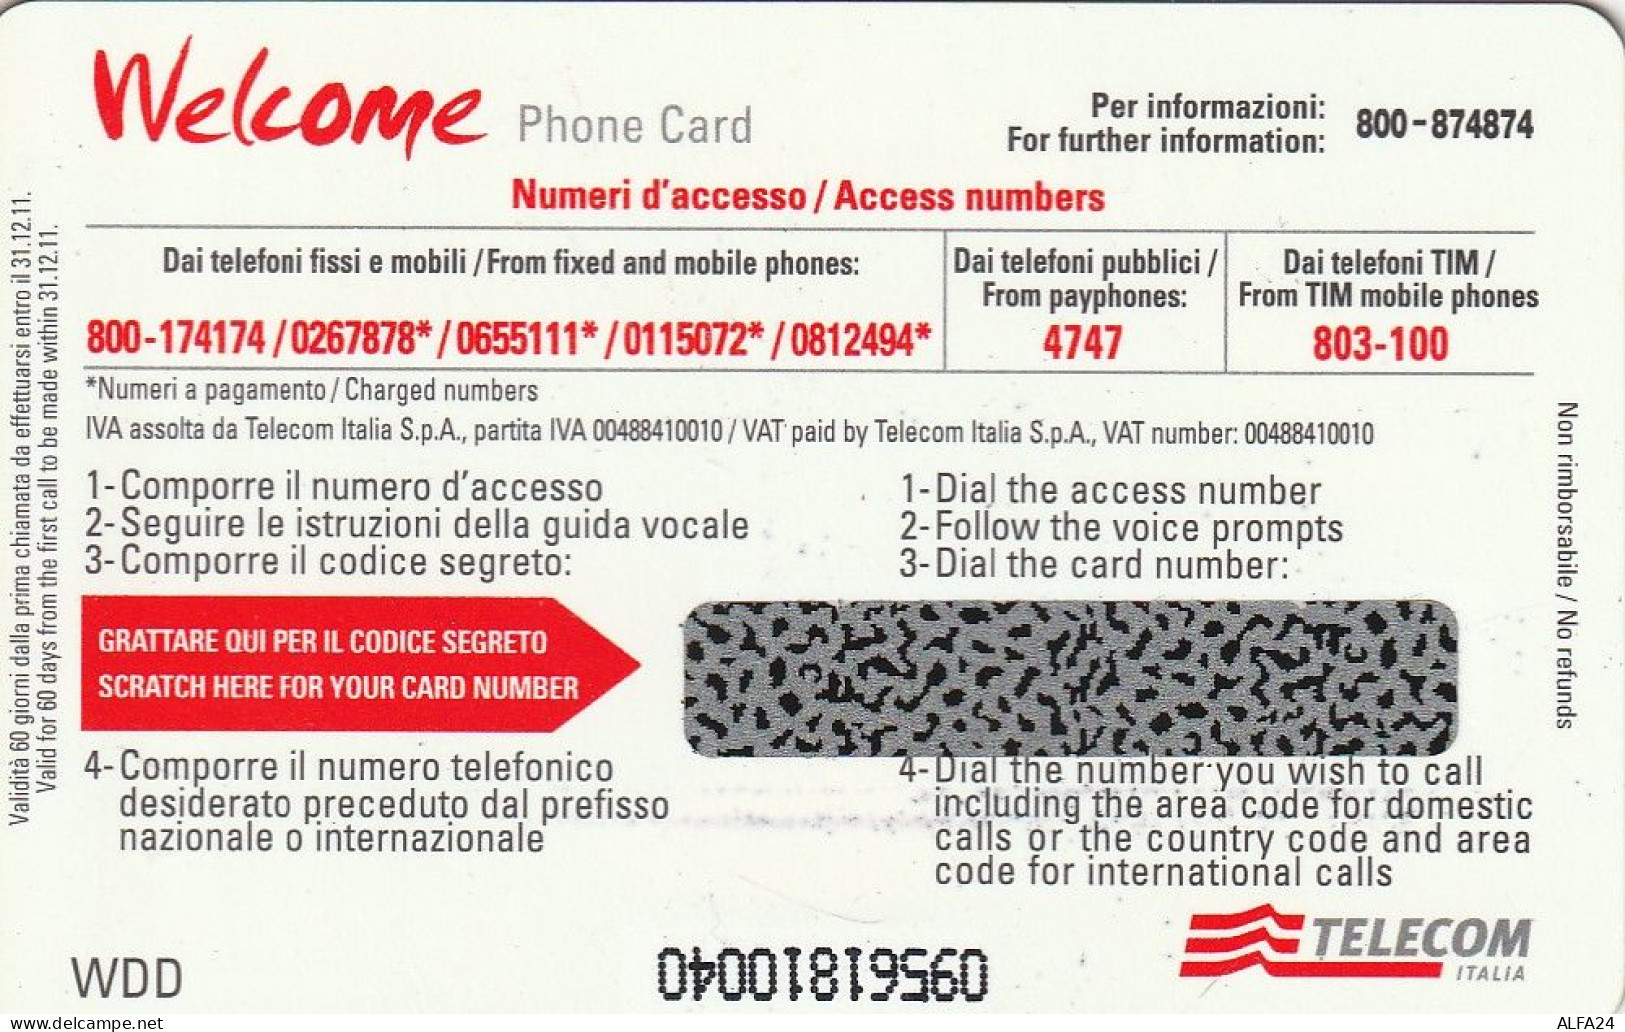 PREPAID PHONE CARD ITALIA WELCOME WDD (CZ1403 - Public Ordinary